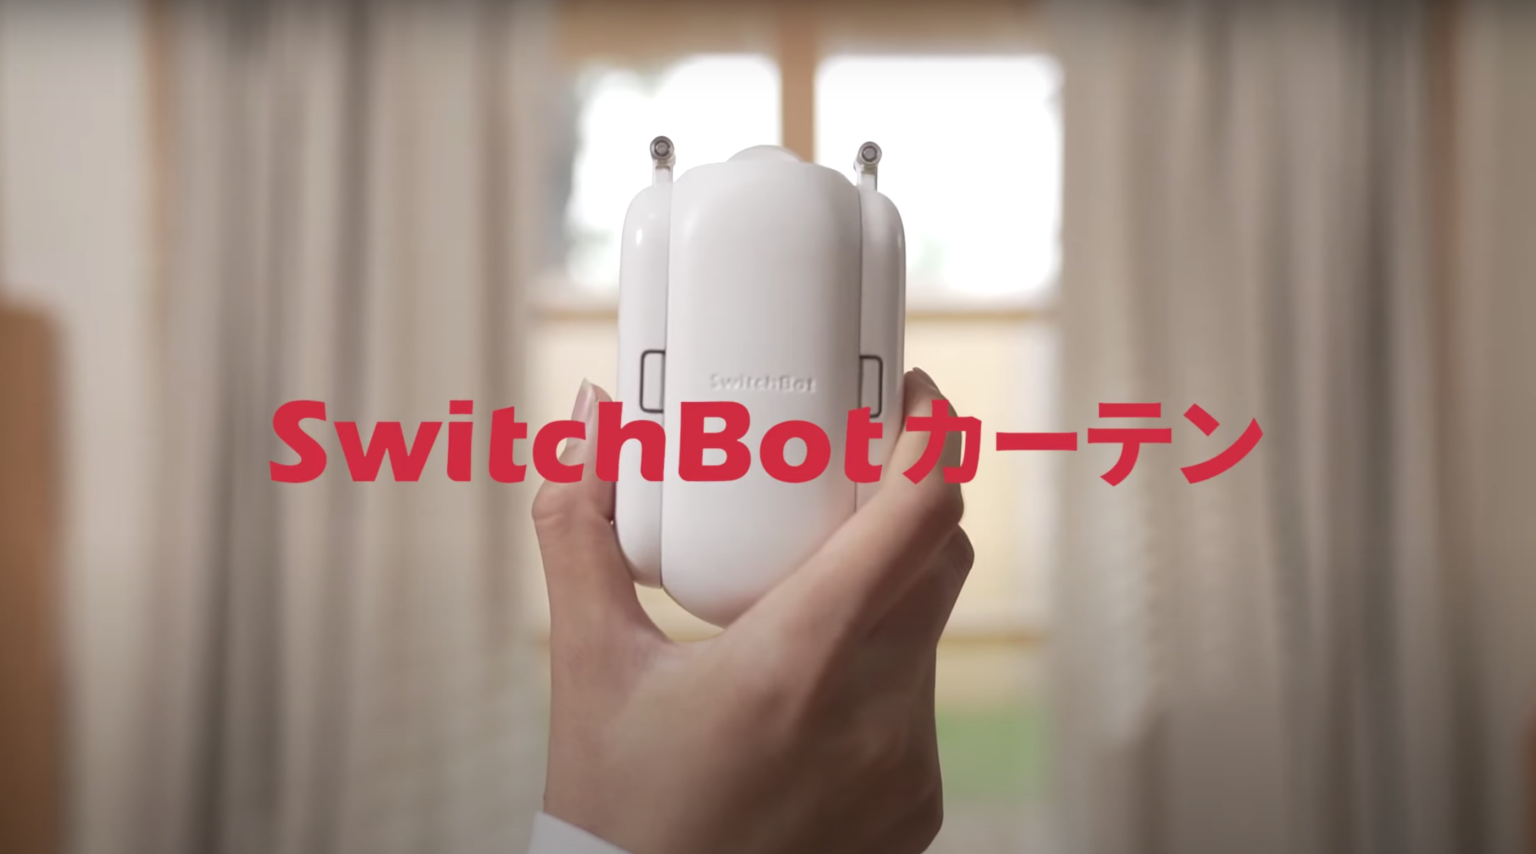 SwitchBotシリーズに質の良い睡眠をサポートする「Switch Botカーテン」が登場